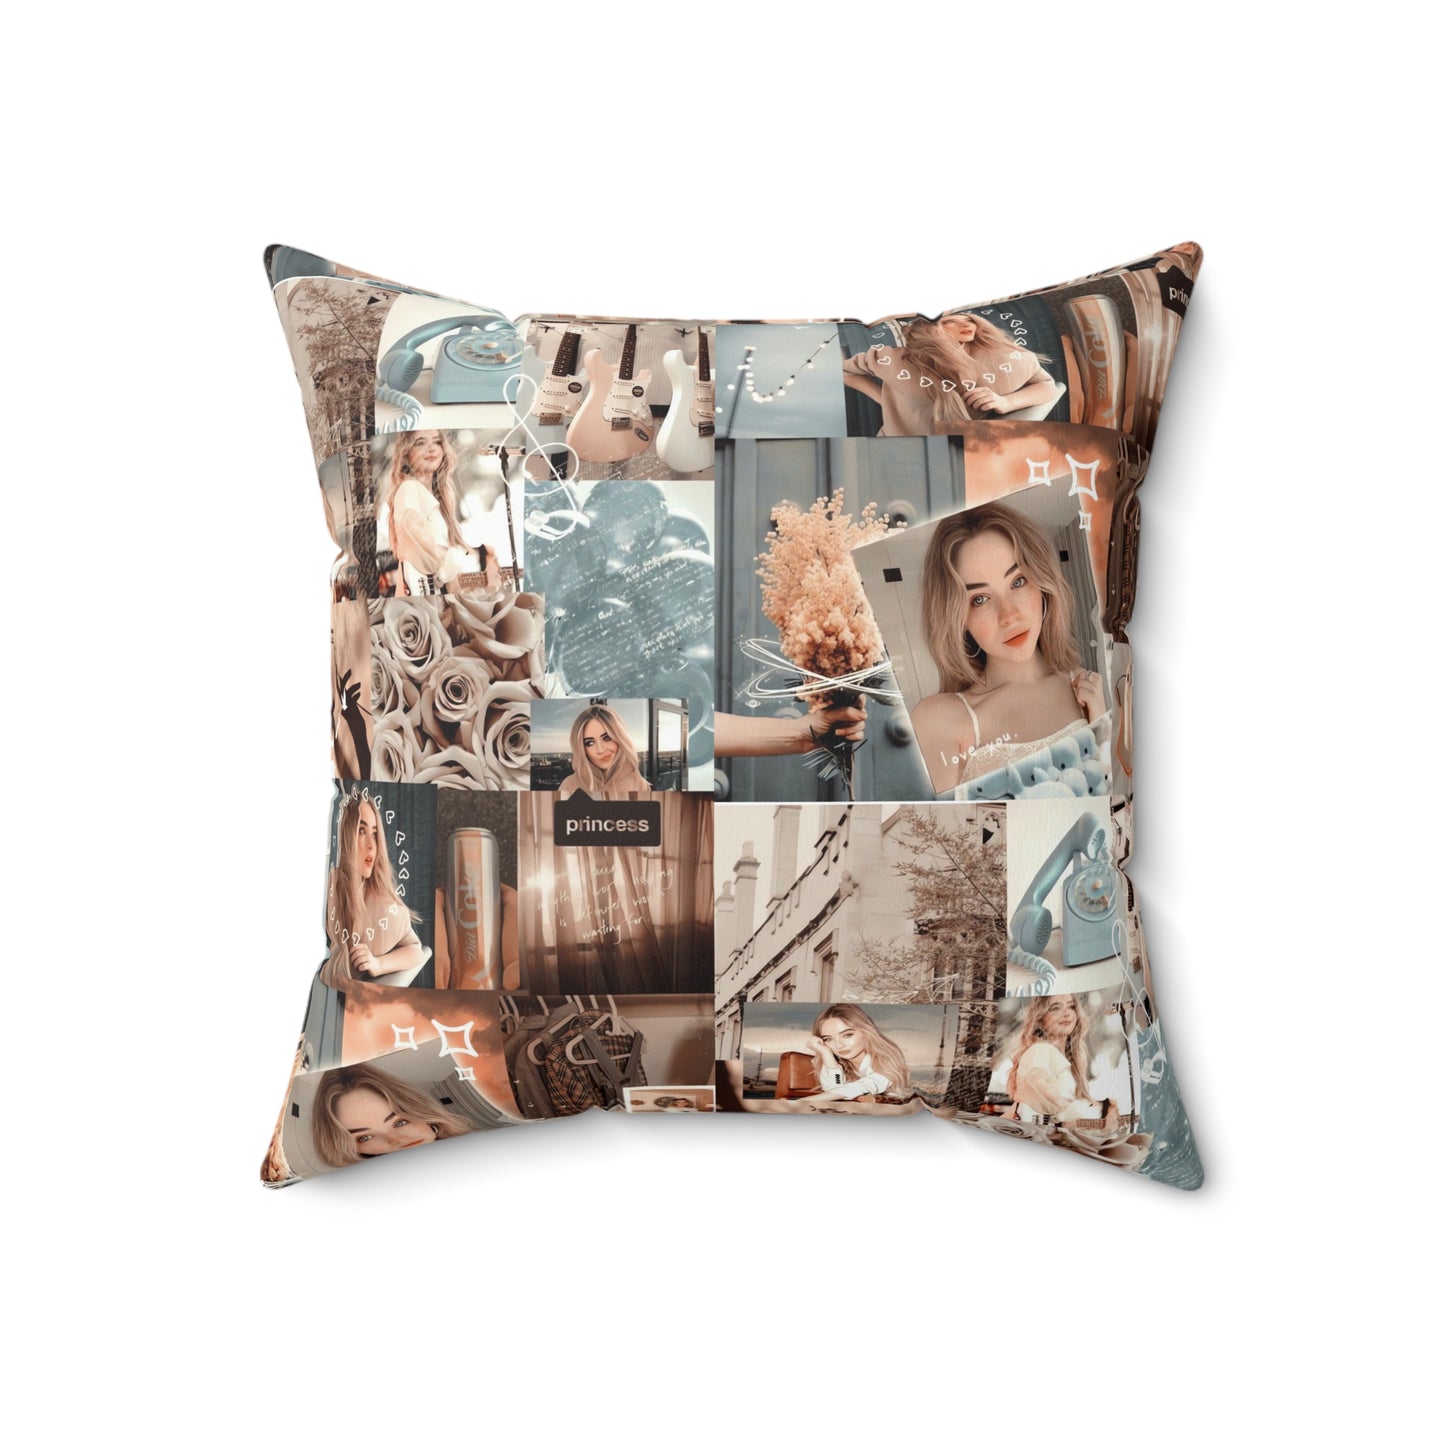 Sabrina Carpenter Peachy Princess Collage Spun Polyester Square Pillow